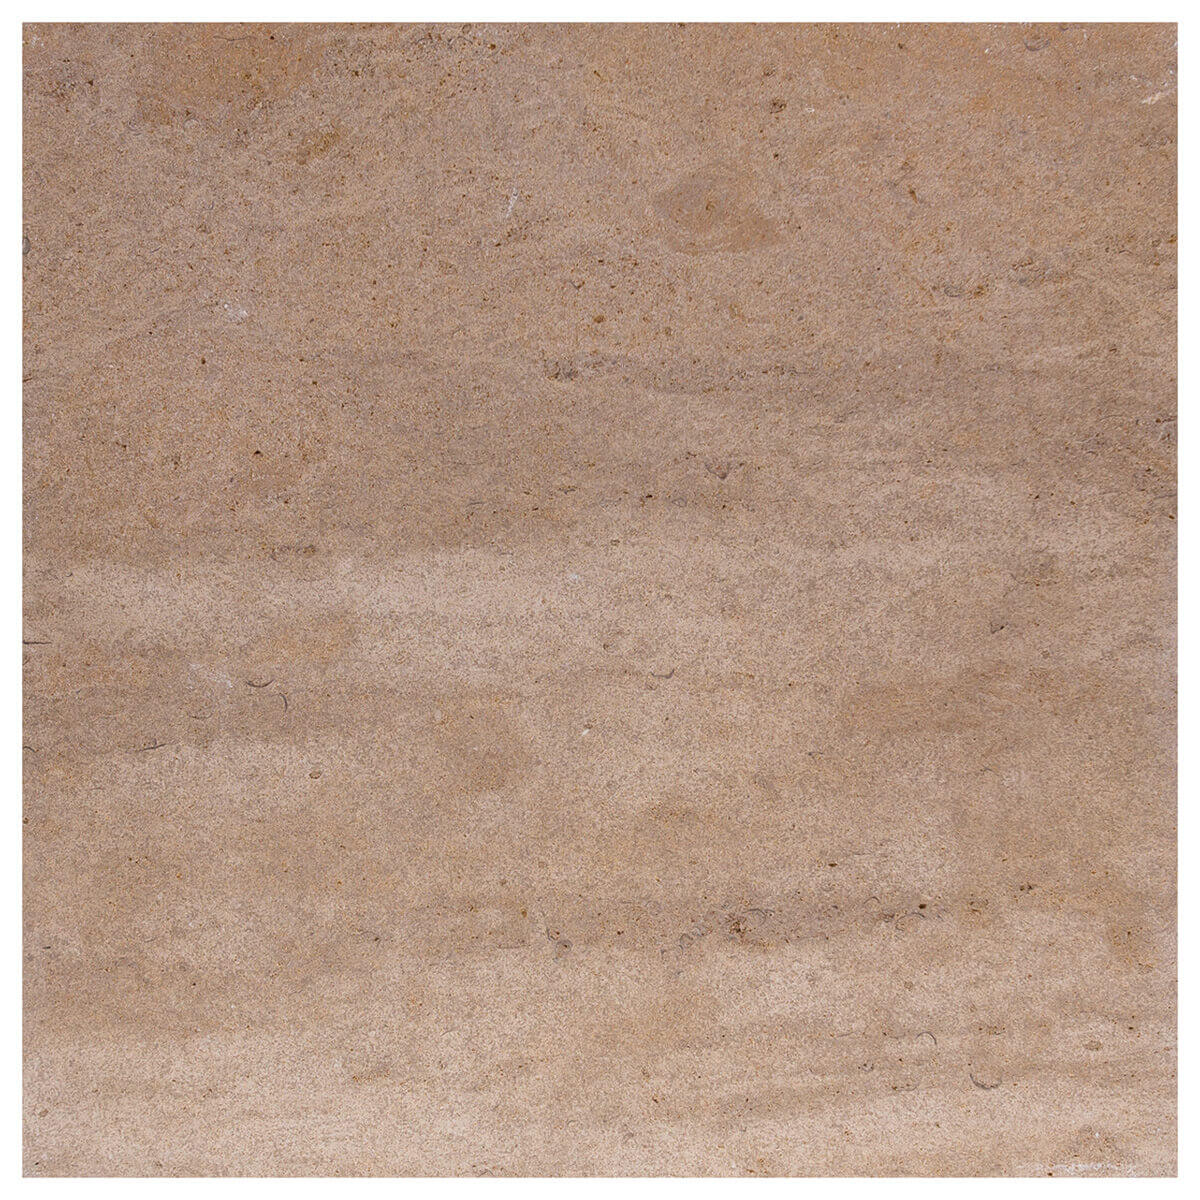 haussmann beaumaniere classic limestone square natural stone field tile 24x24 honed